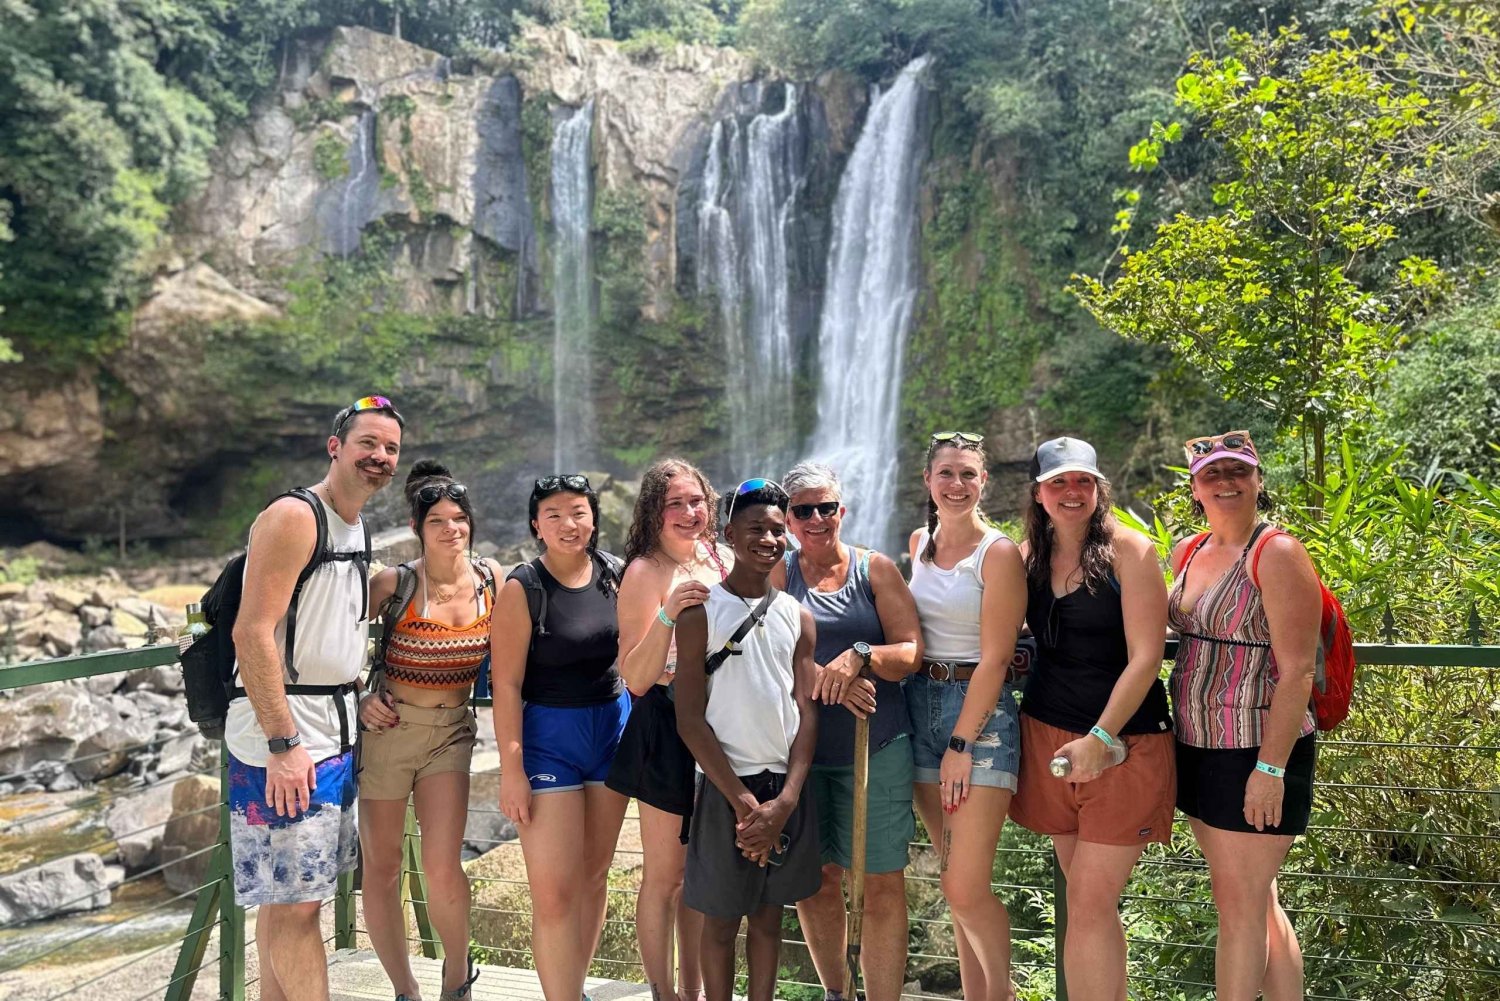 Goditi ed esplora l'incredibile cascata di Nauyaca!